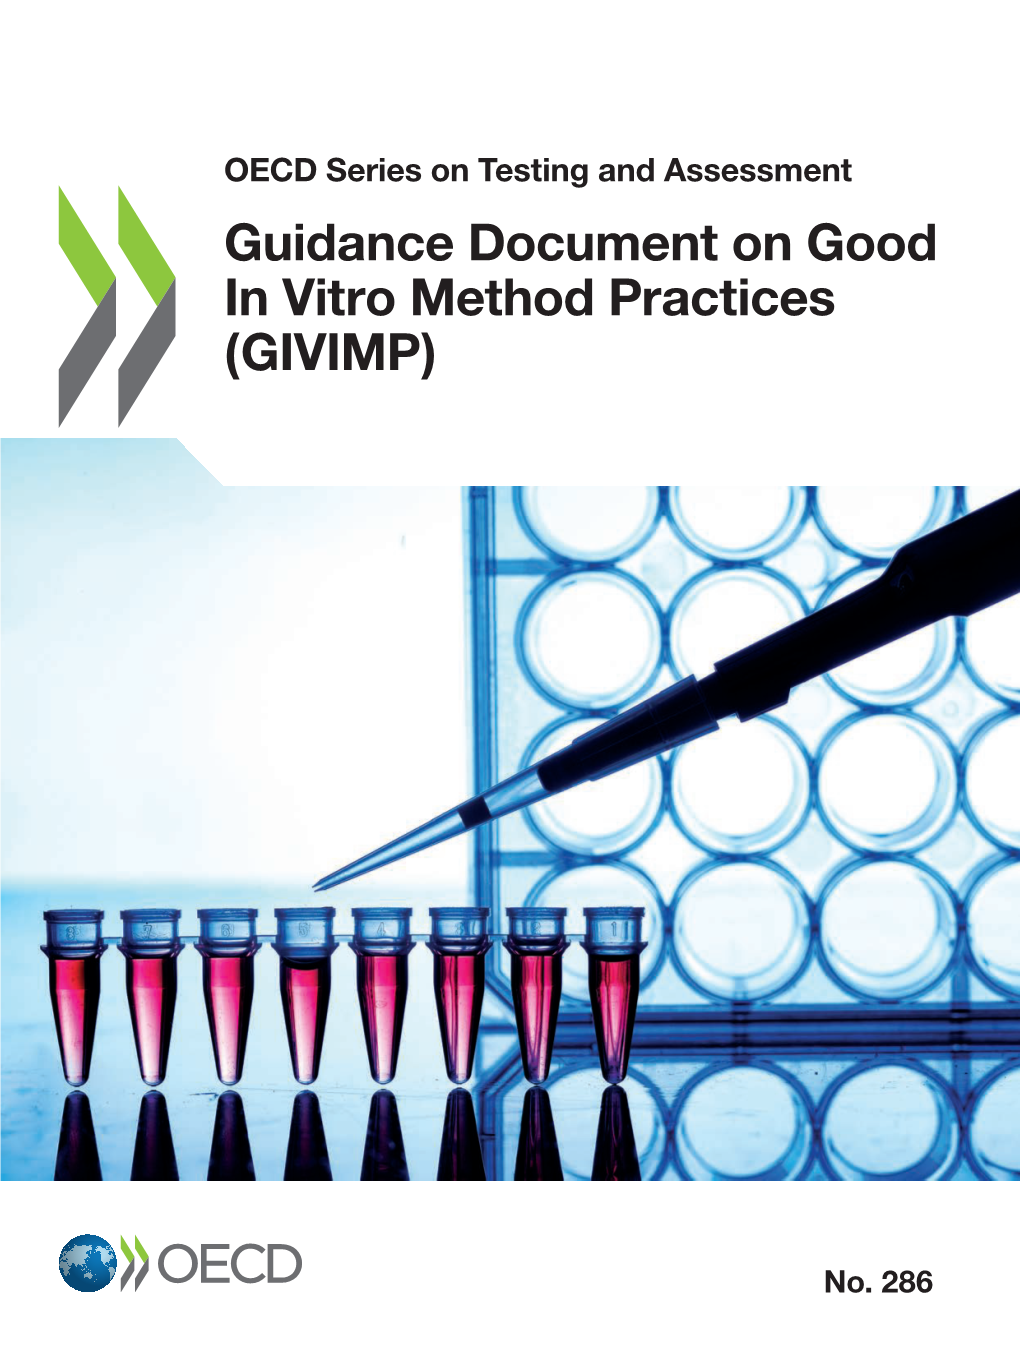 Guidance Document on Good in Vitro Method Practices (GIVIMP) Good in Vitro Method Practices (GIVIMP) Practices Method Vitro in Good on Document Guidance